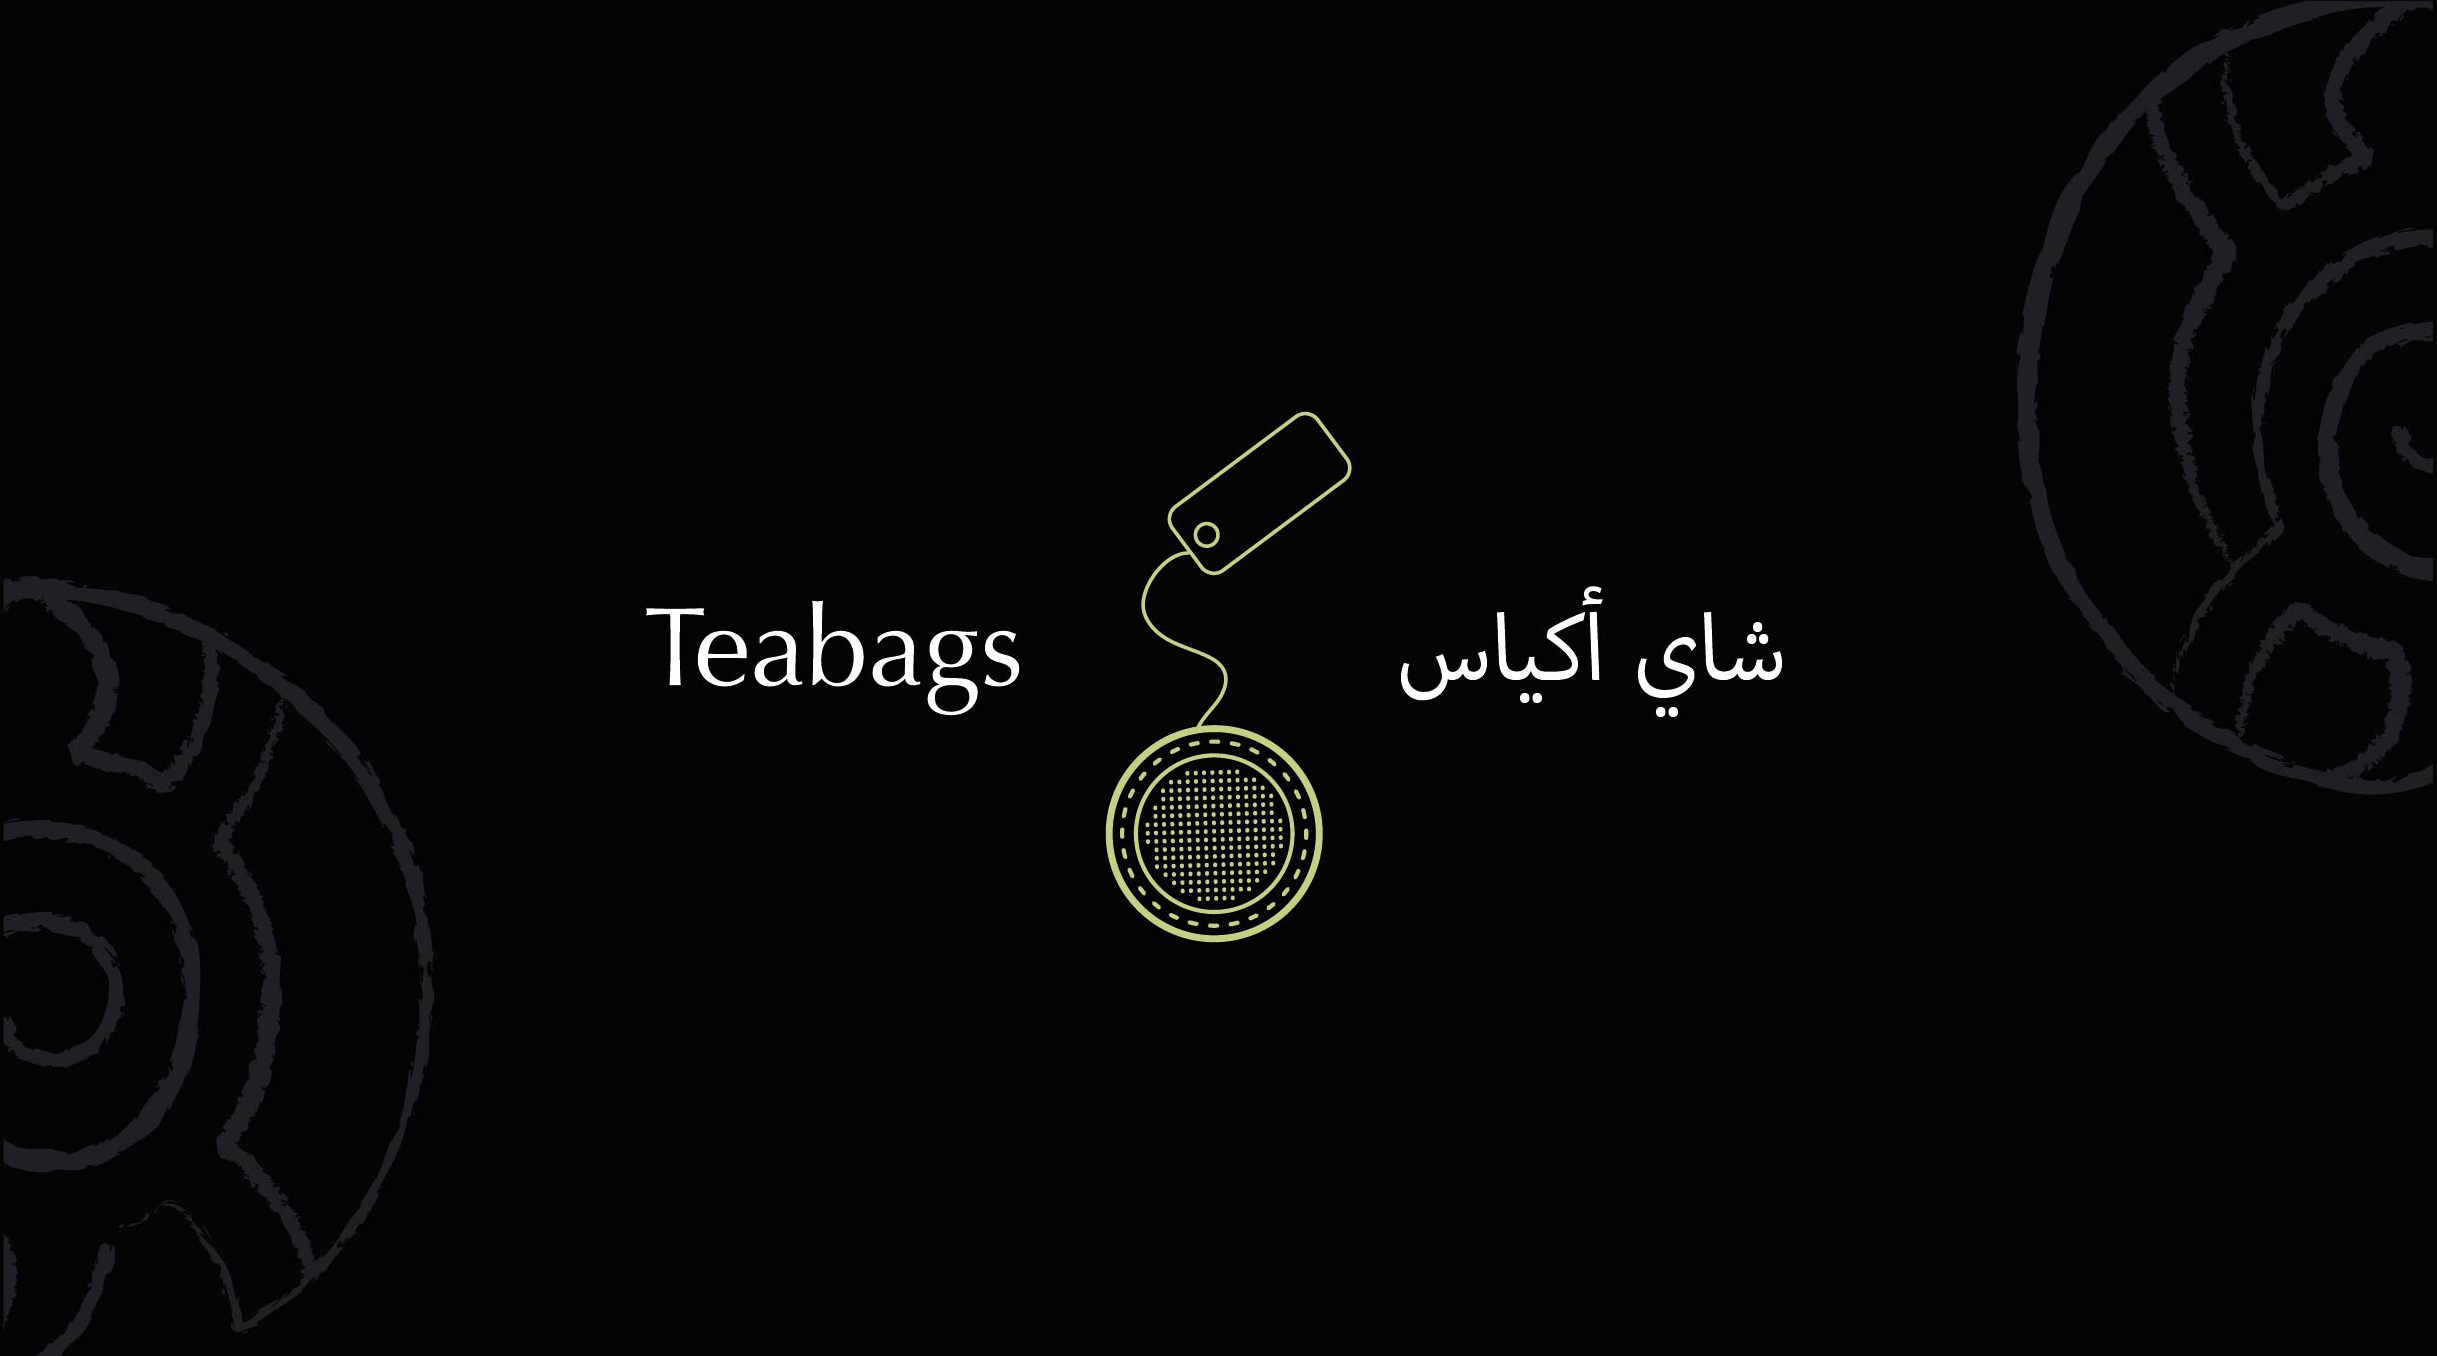 Teabags